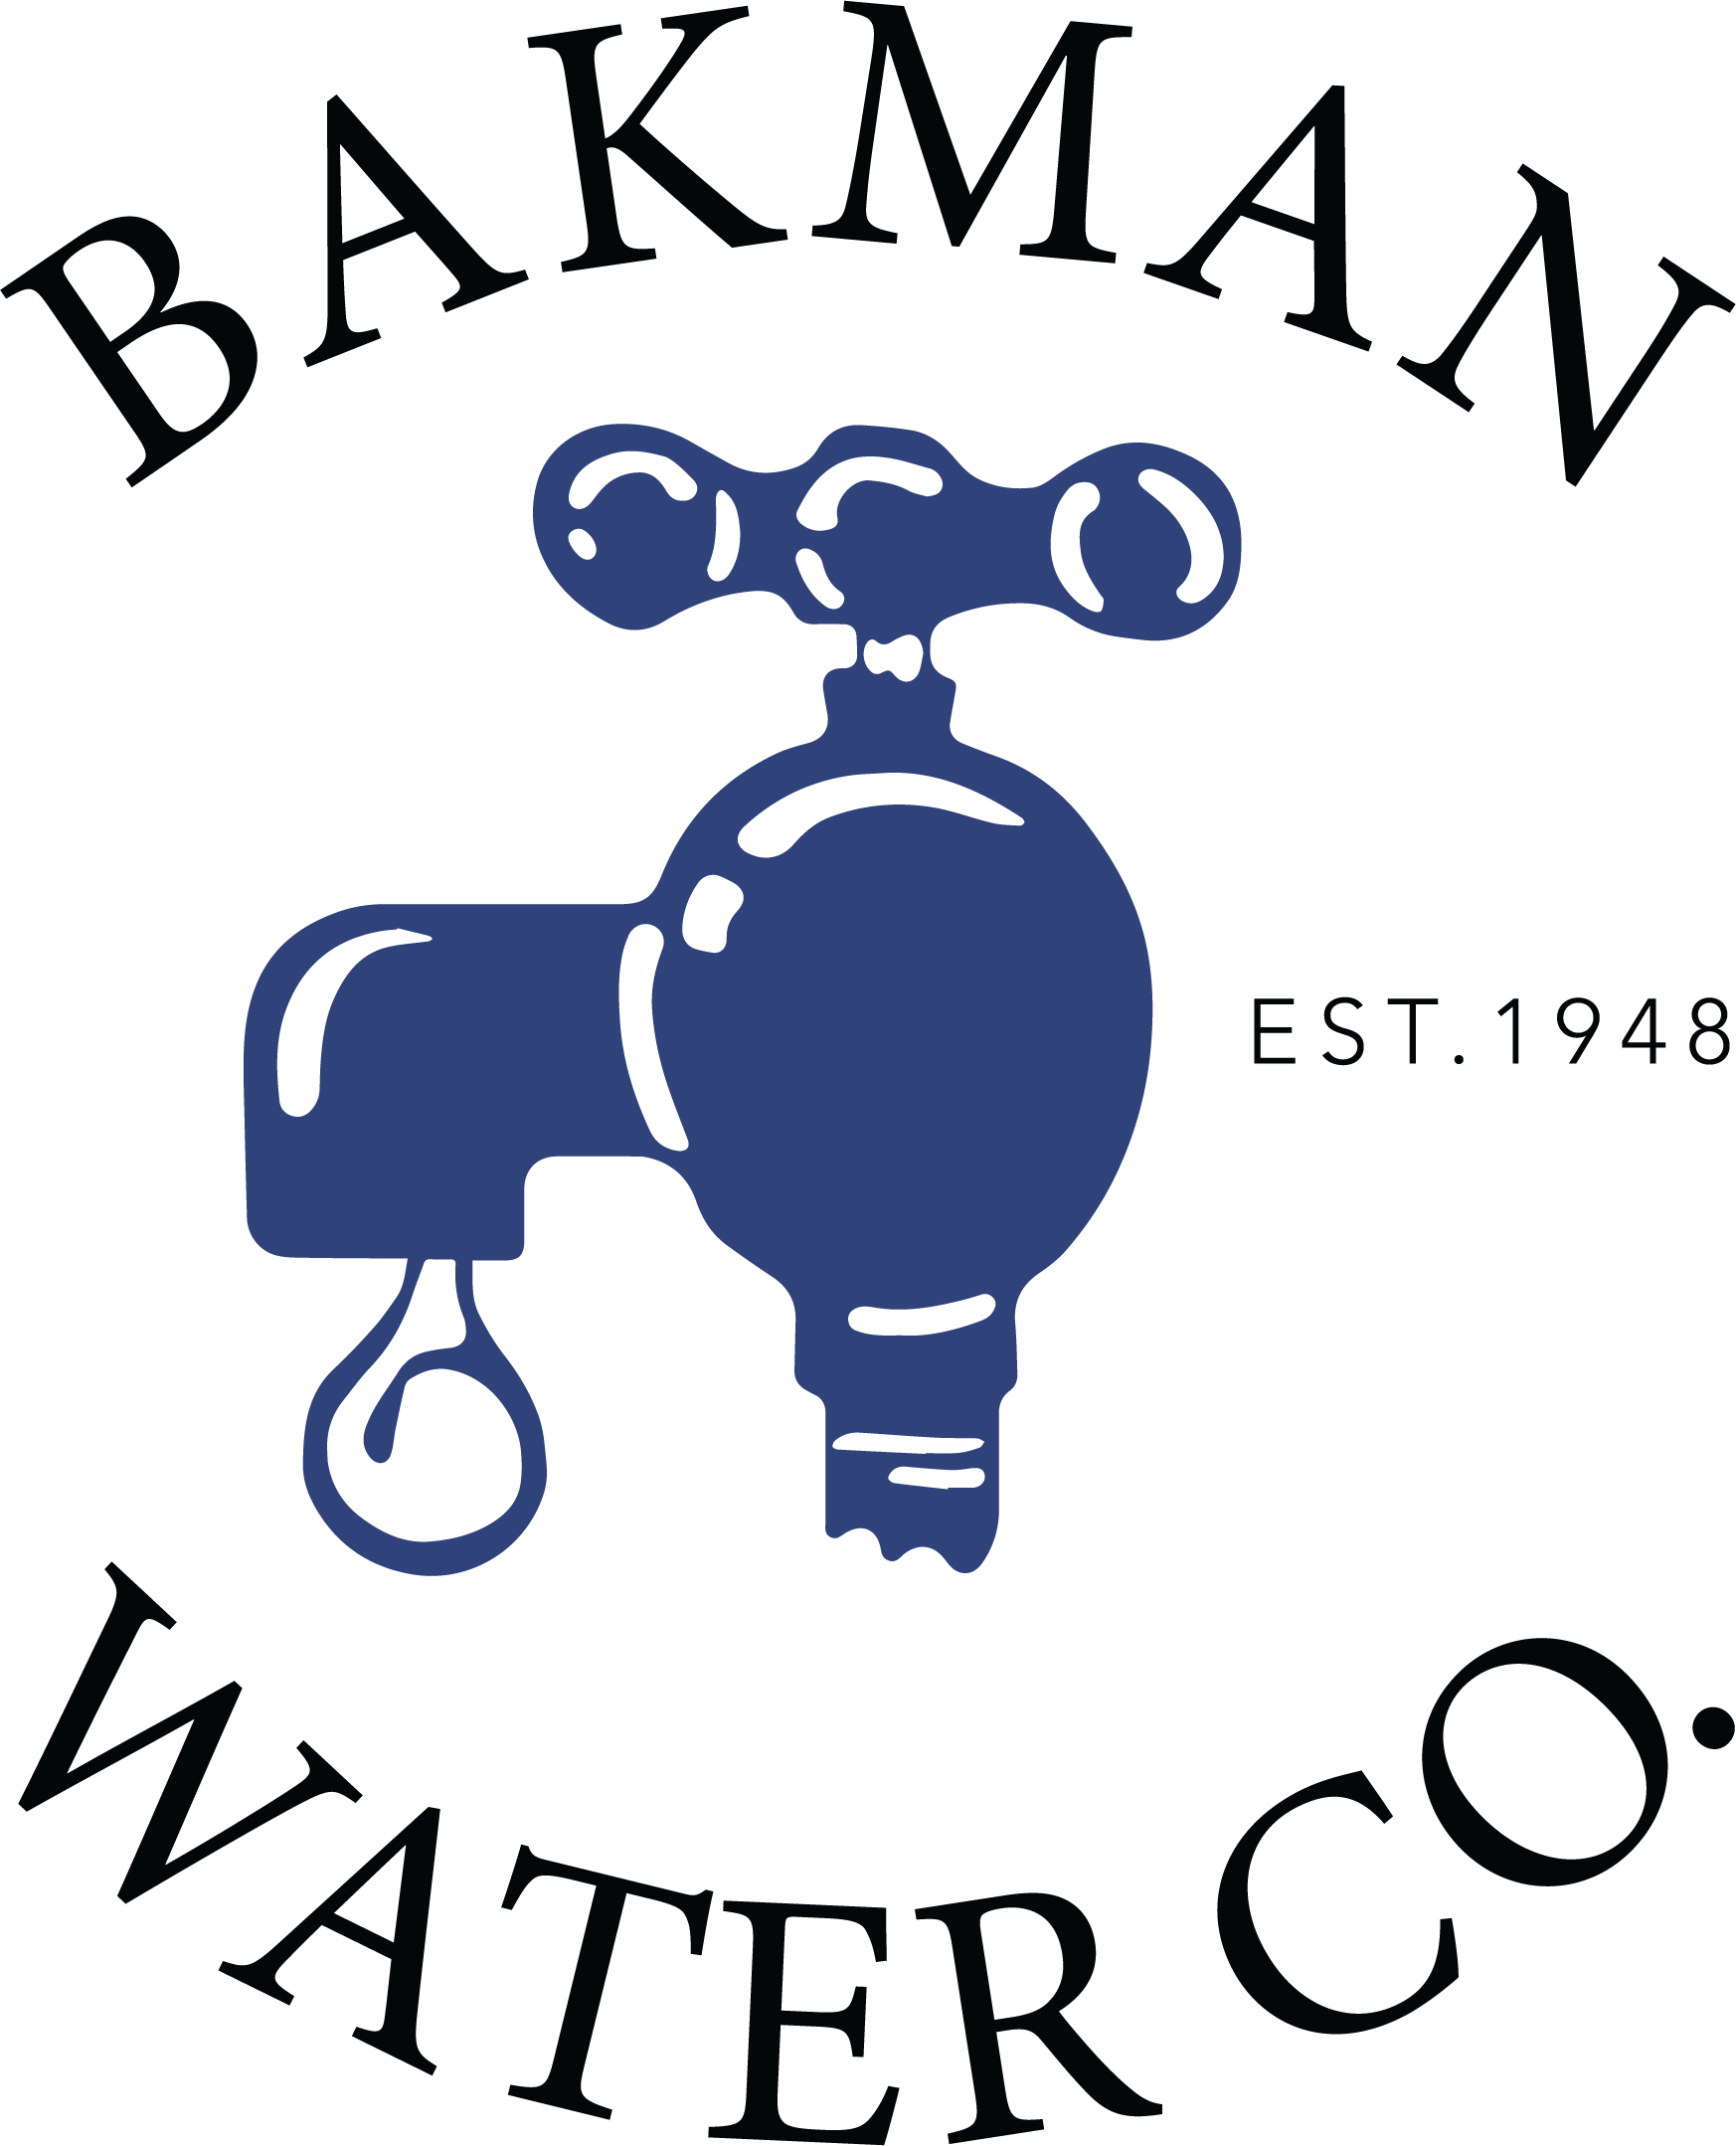 Bakman Water Company